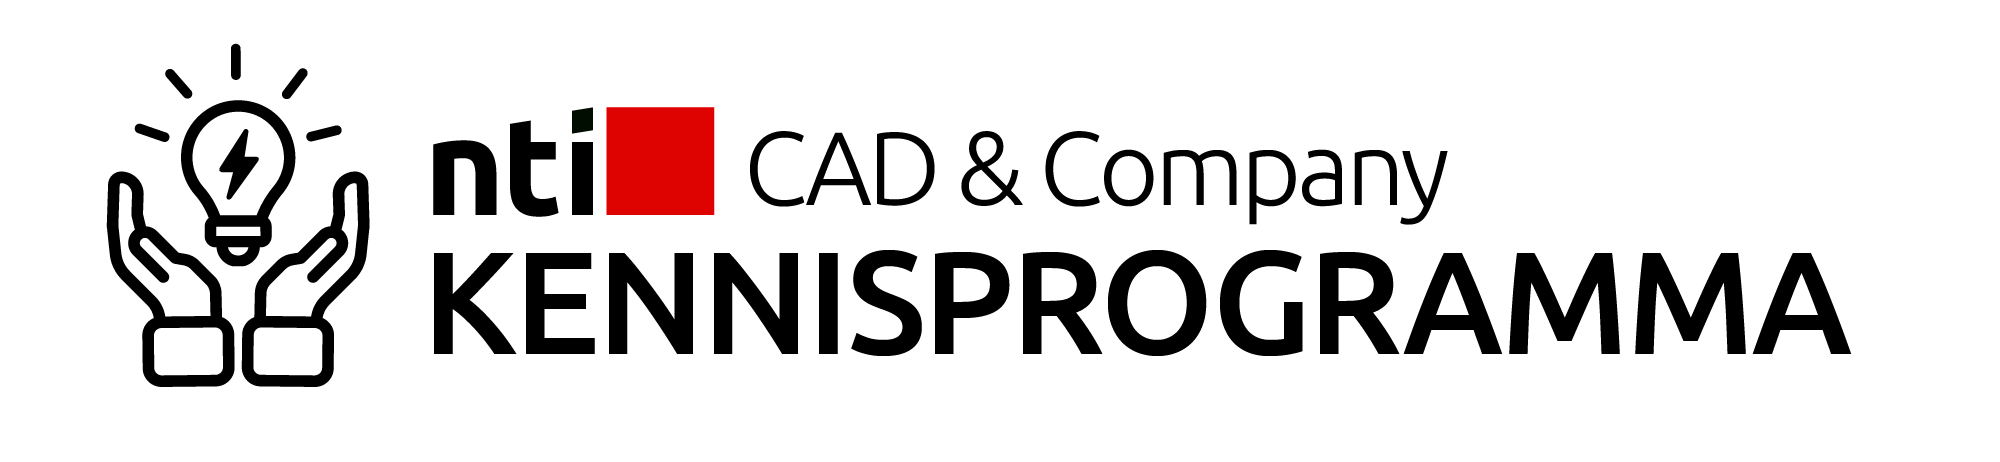 nti-cad-company-kennisprogramma-logo-black.png